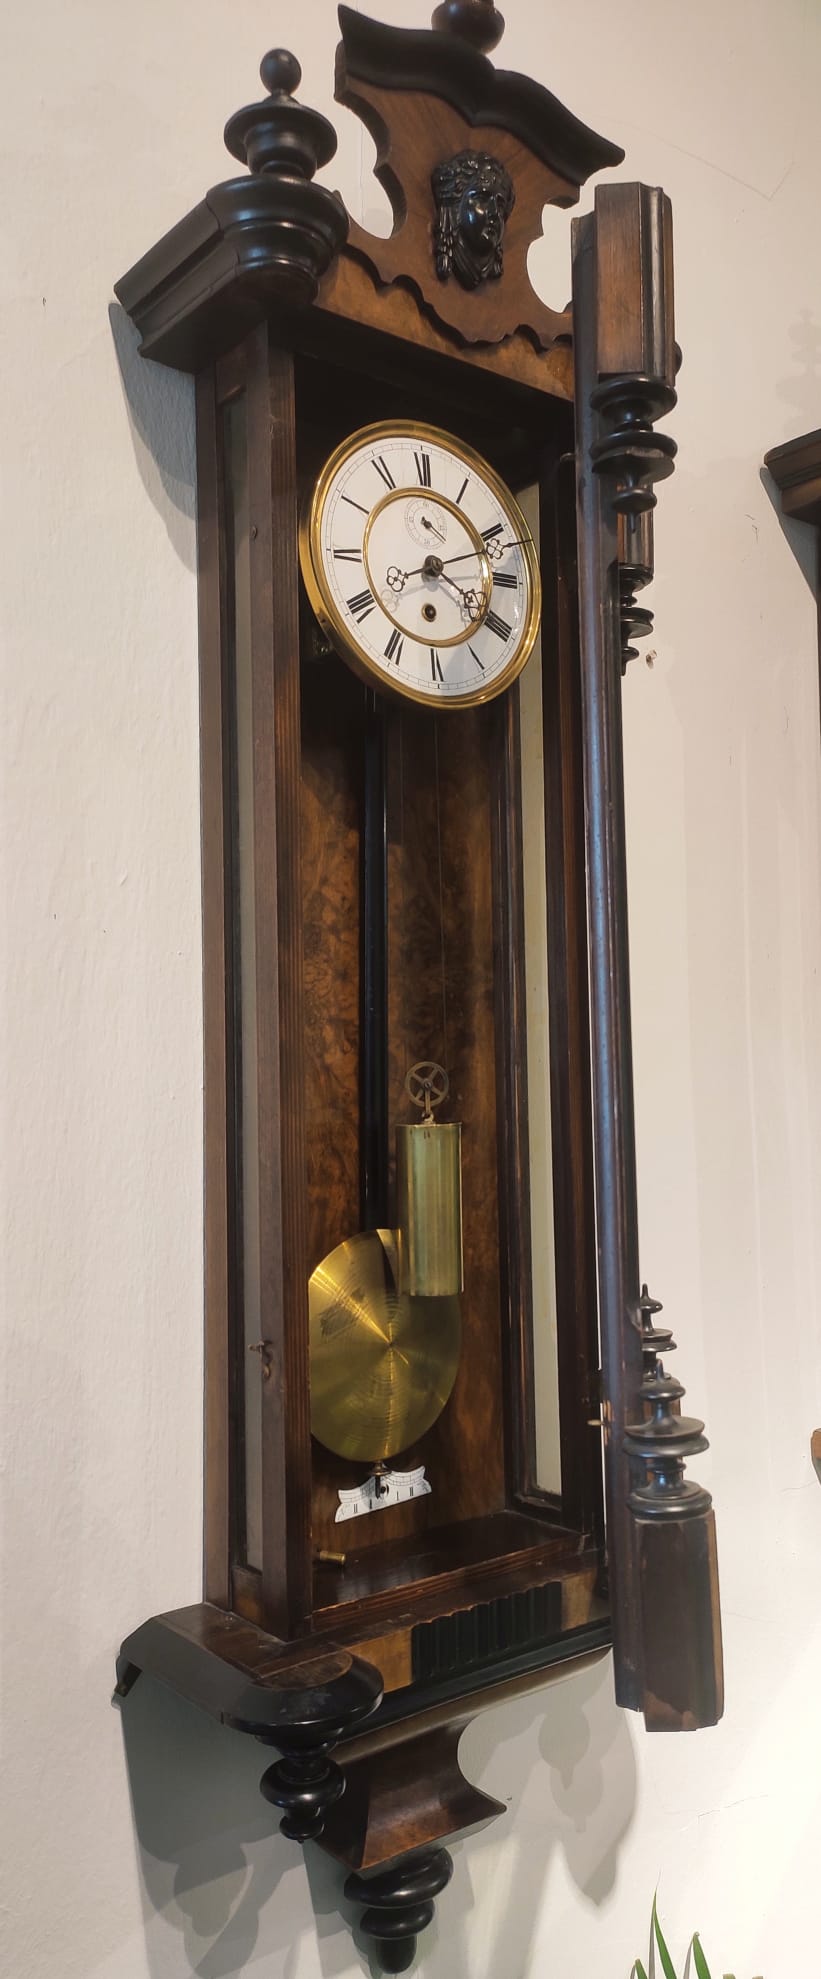  Antique Vienna Wall Clock